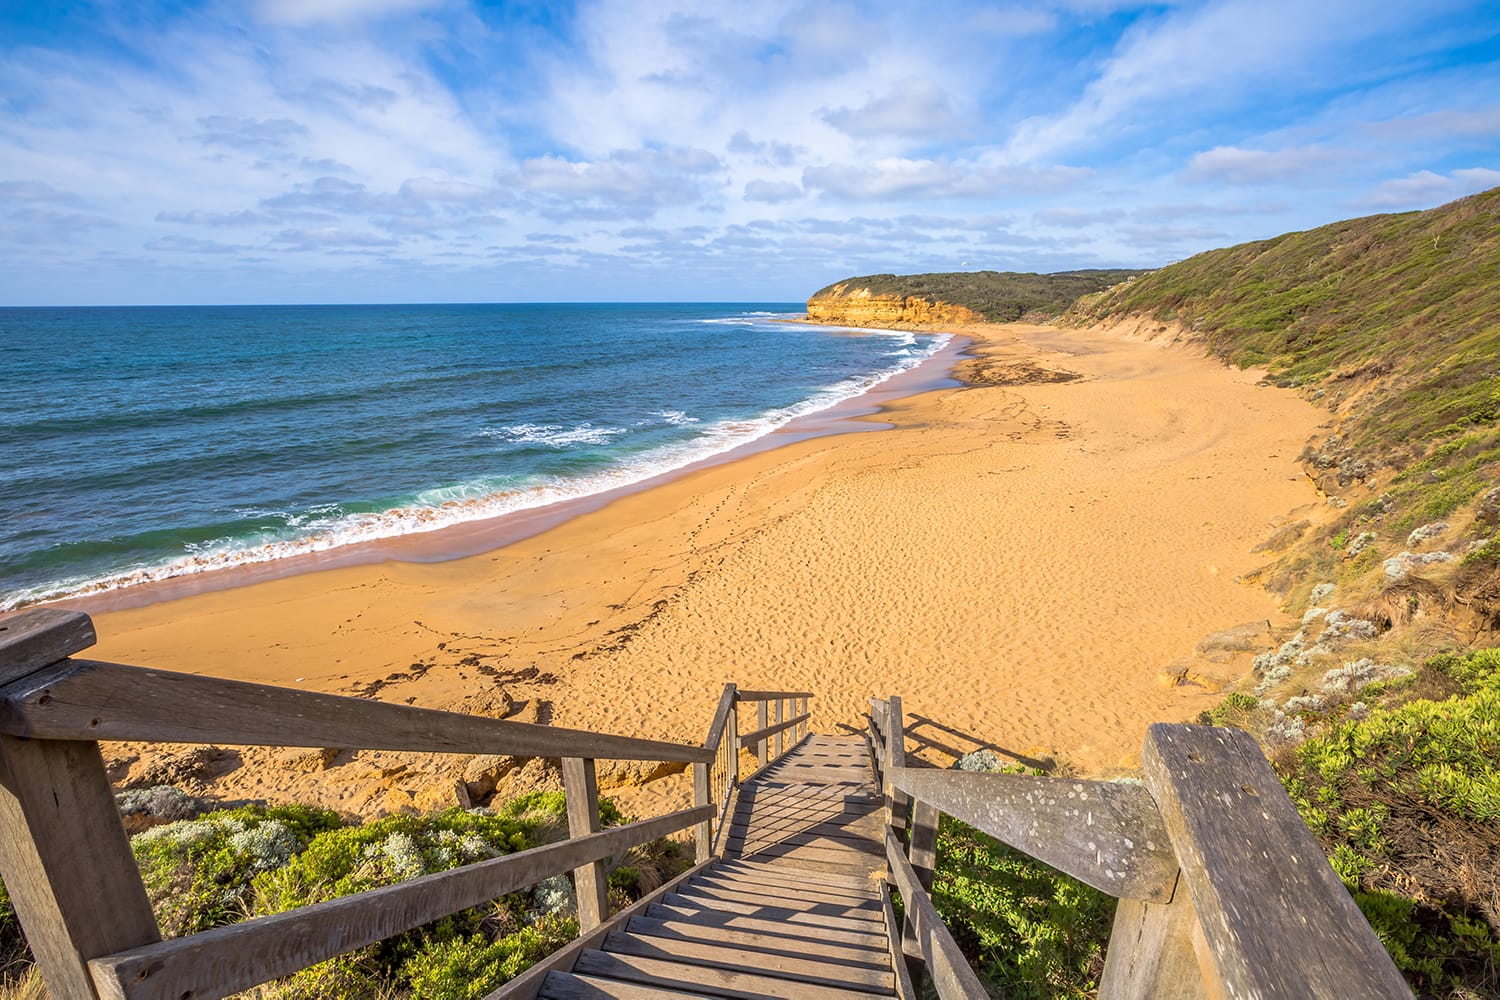 The legendary Bells Beach of the movie Point Break, near Torquay, gateway to the Surf Coast of Victoria, Australia